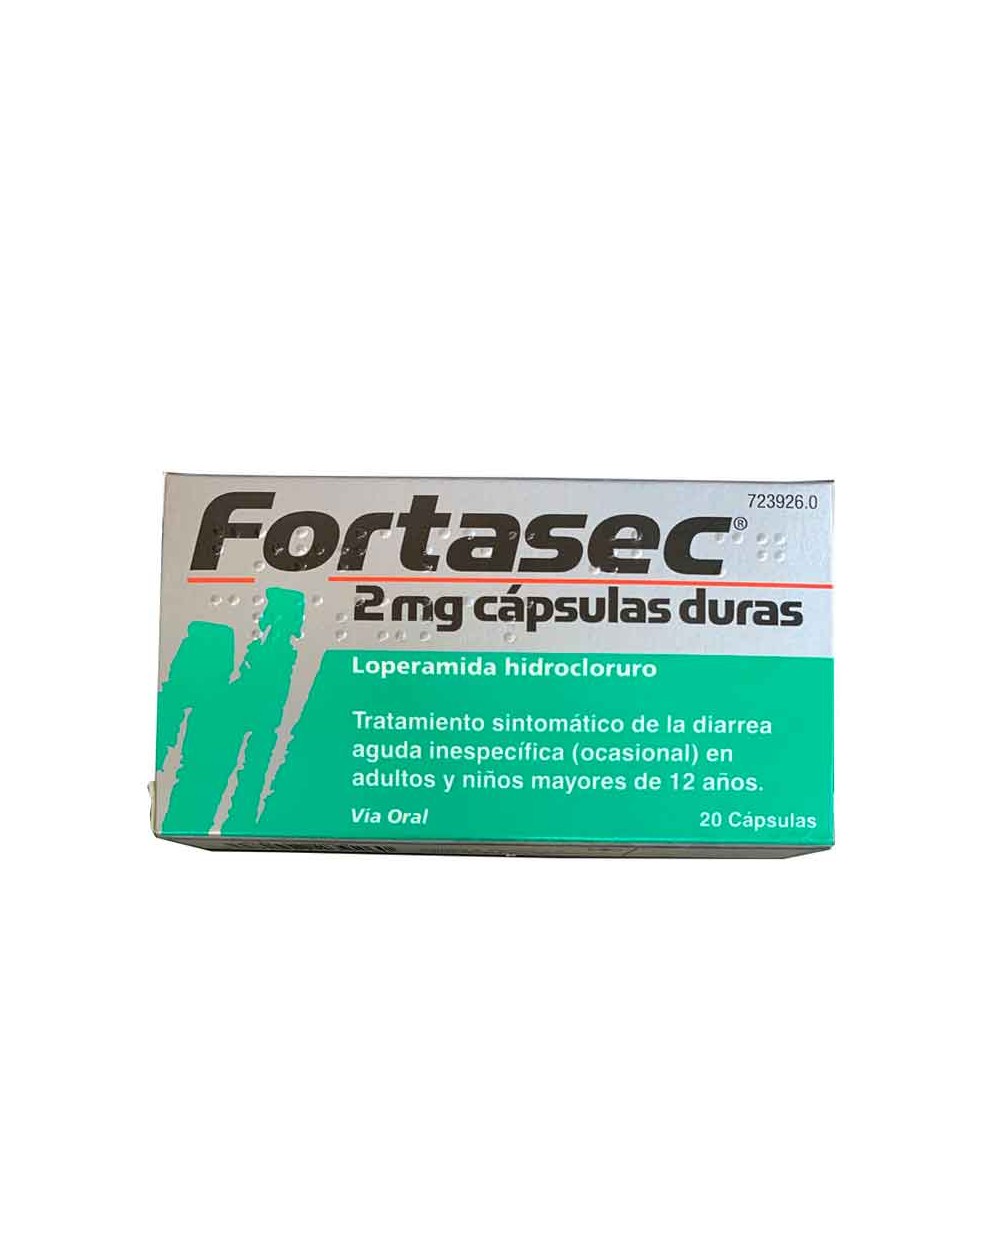 Fortasec 2 mg capsulas duras 20 unidades